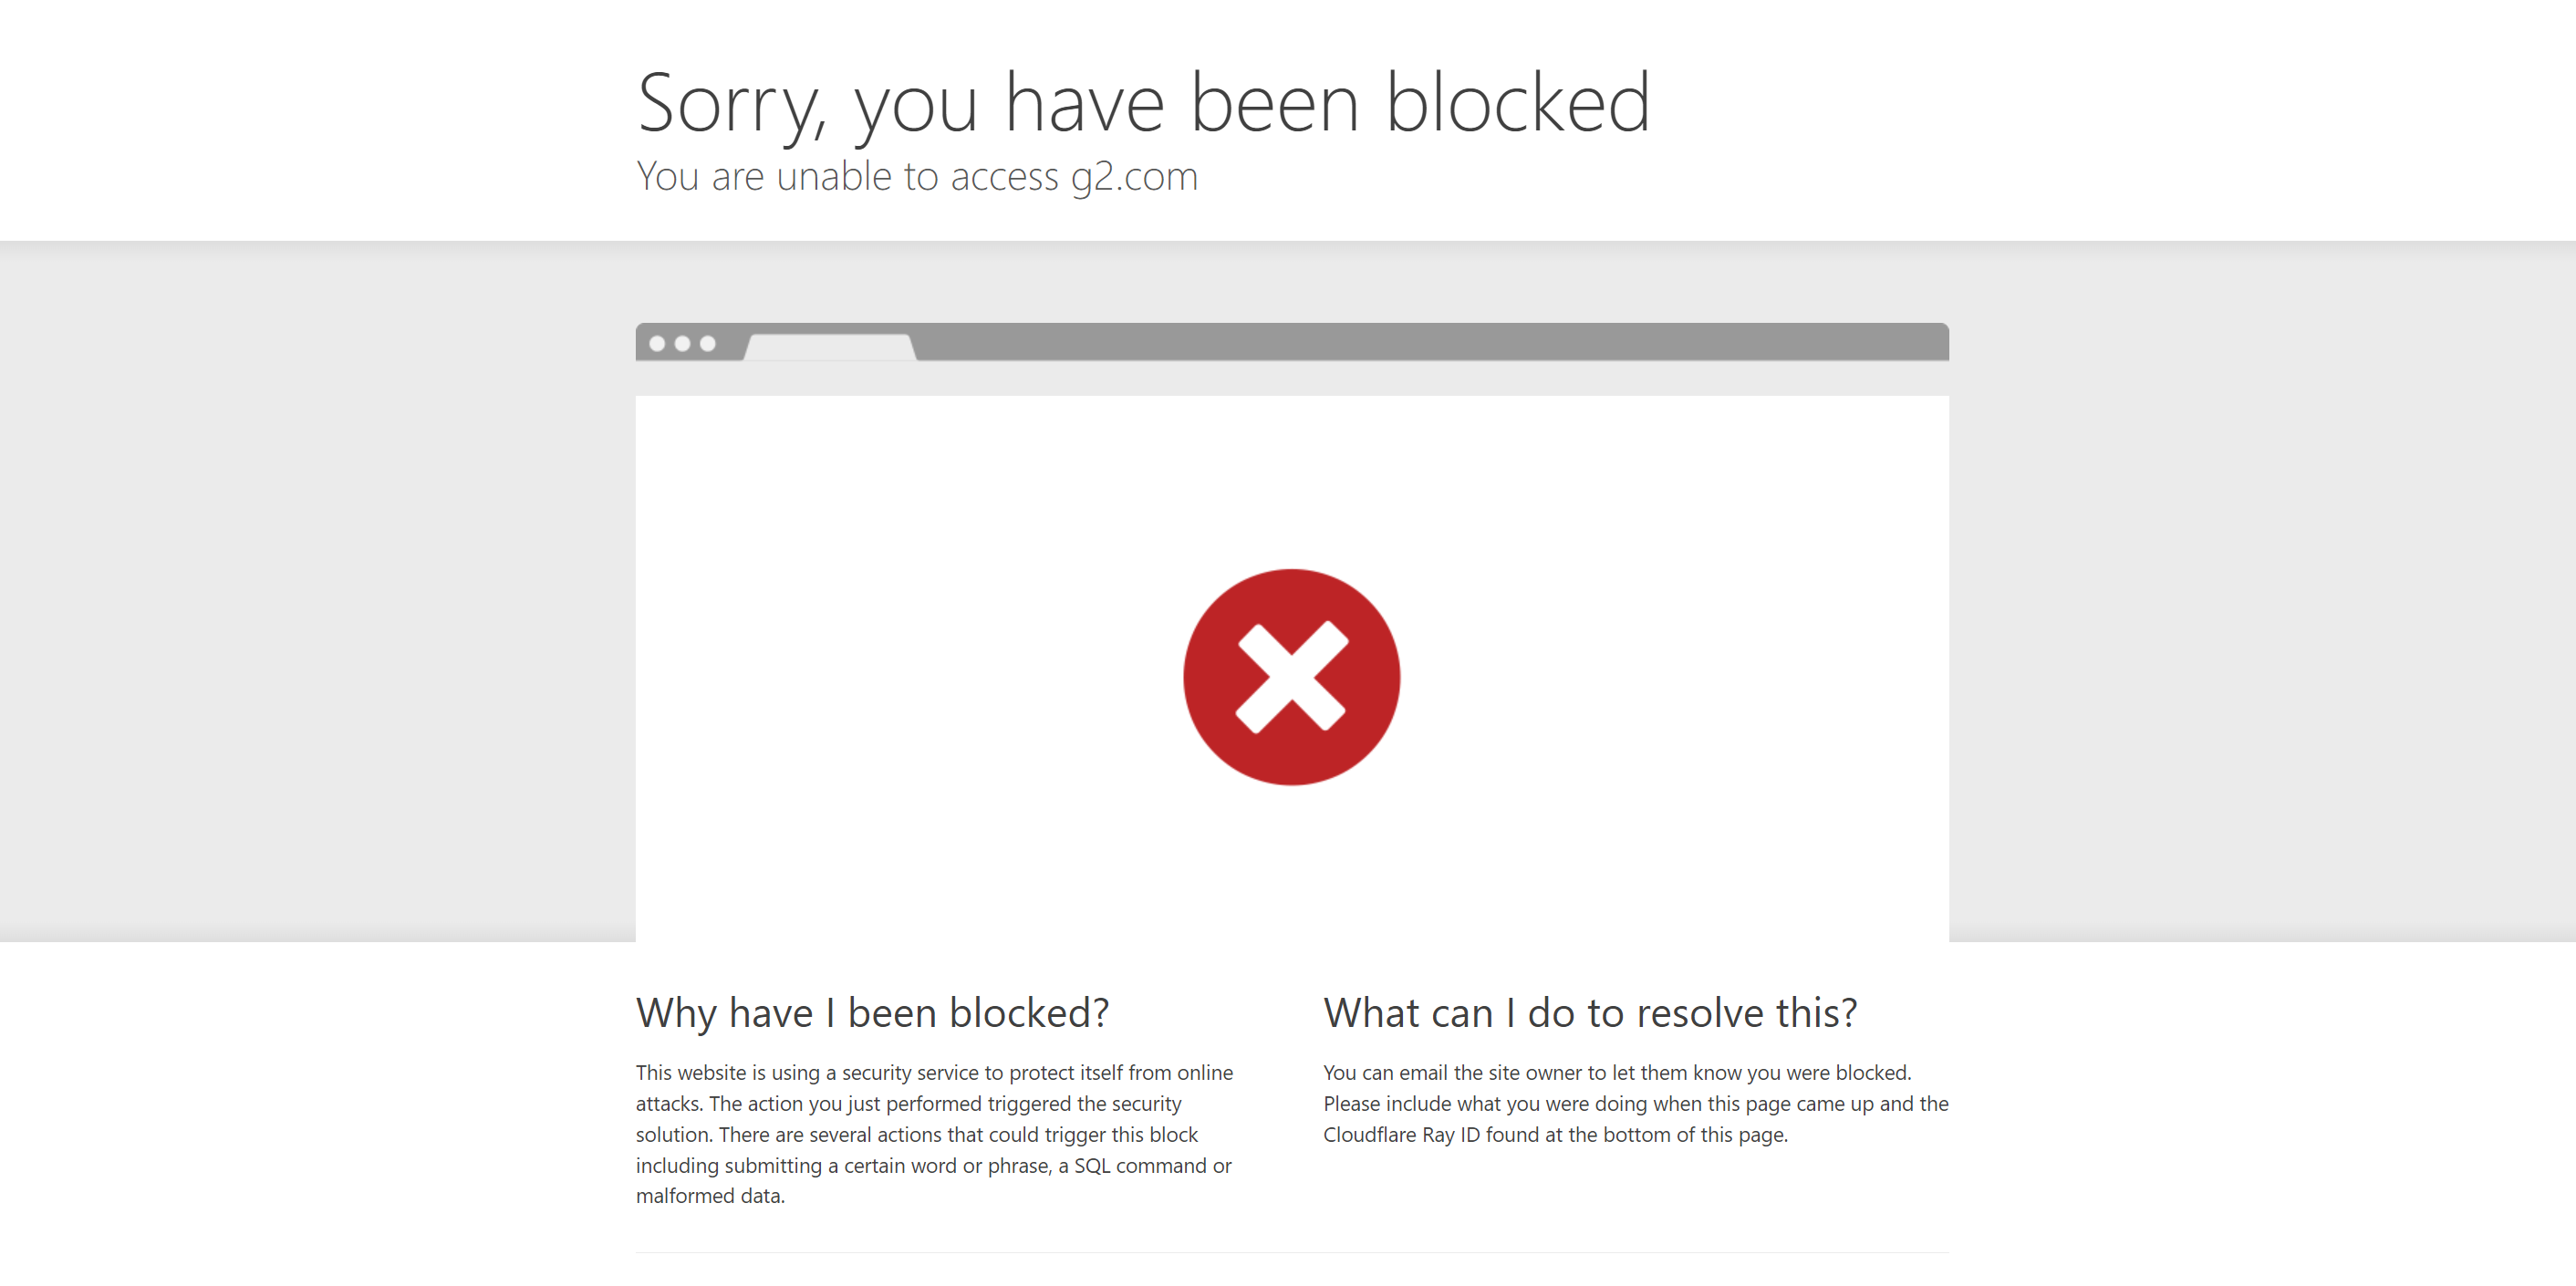 scraper gets blocked by the website